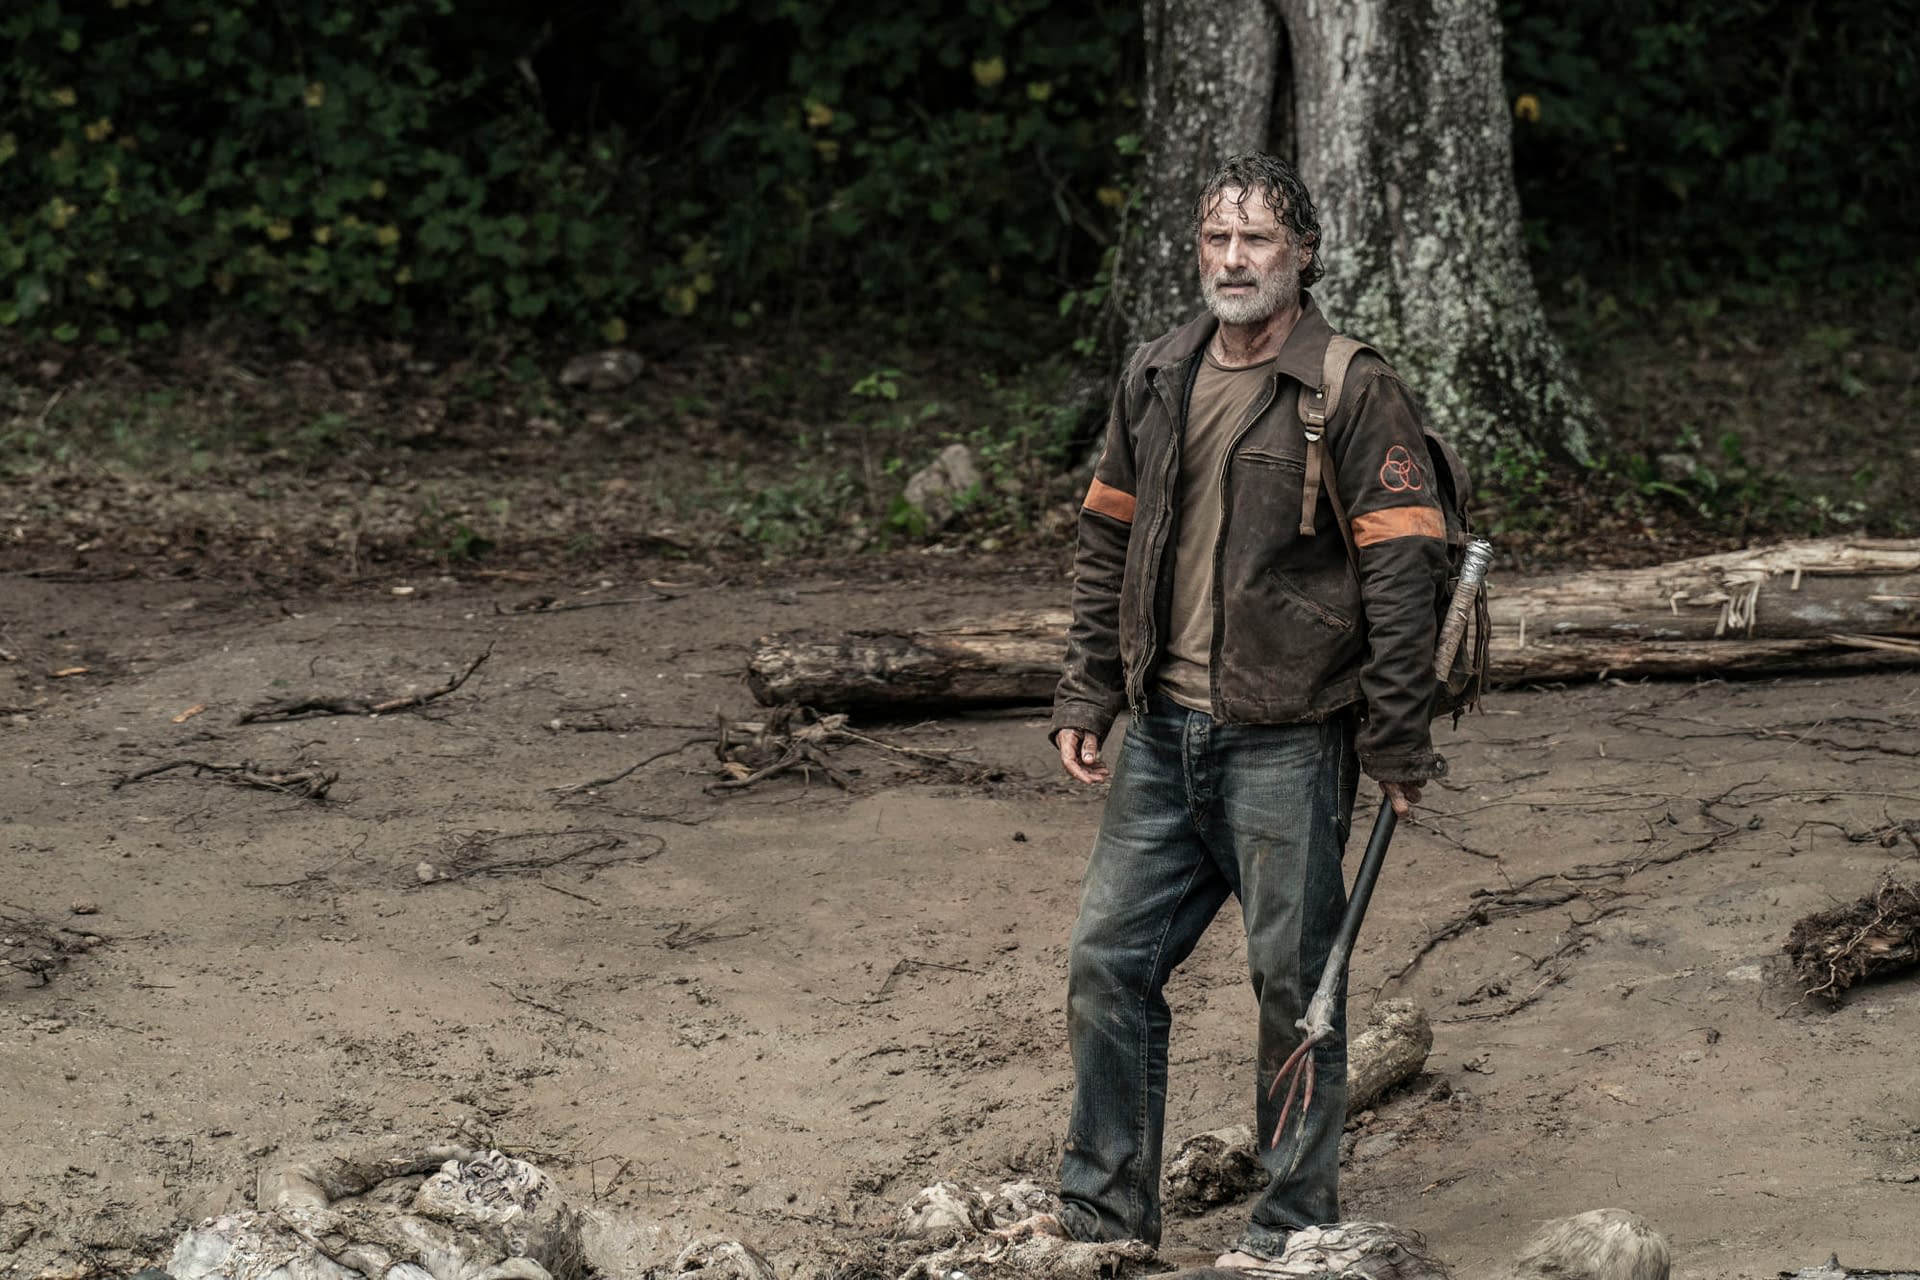 The Walking Dead "Summit" Rick Grimes/Michonne Series Filming Update